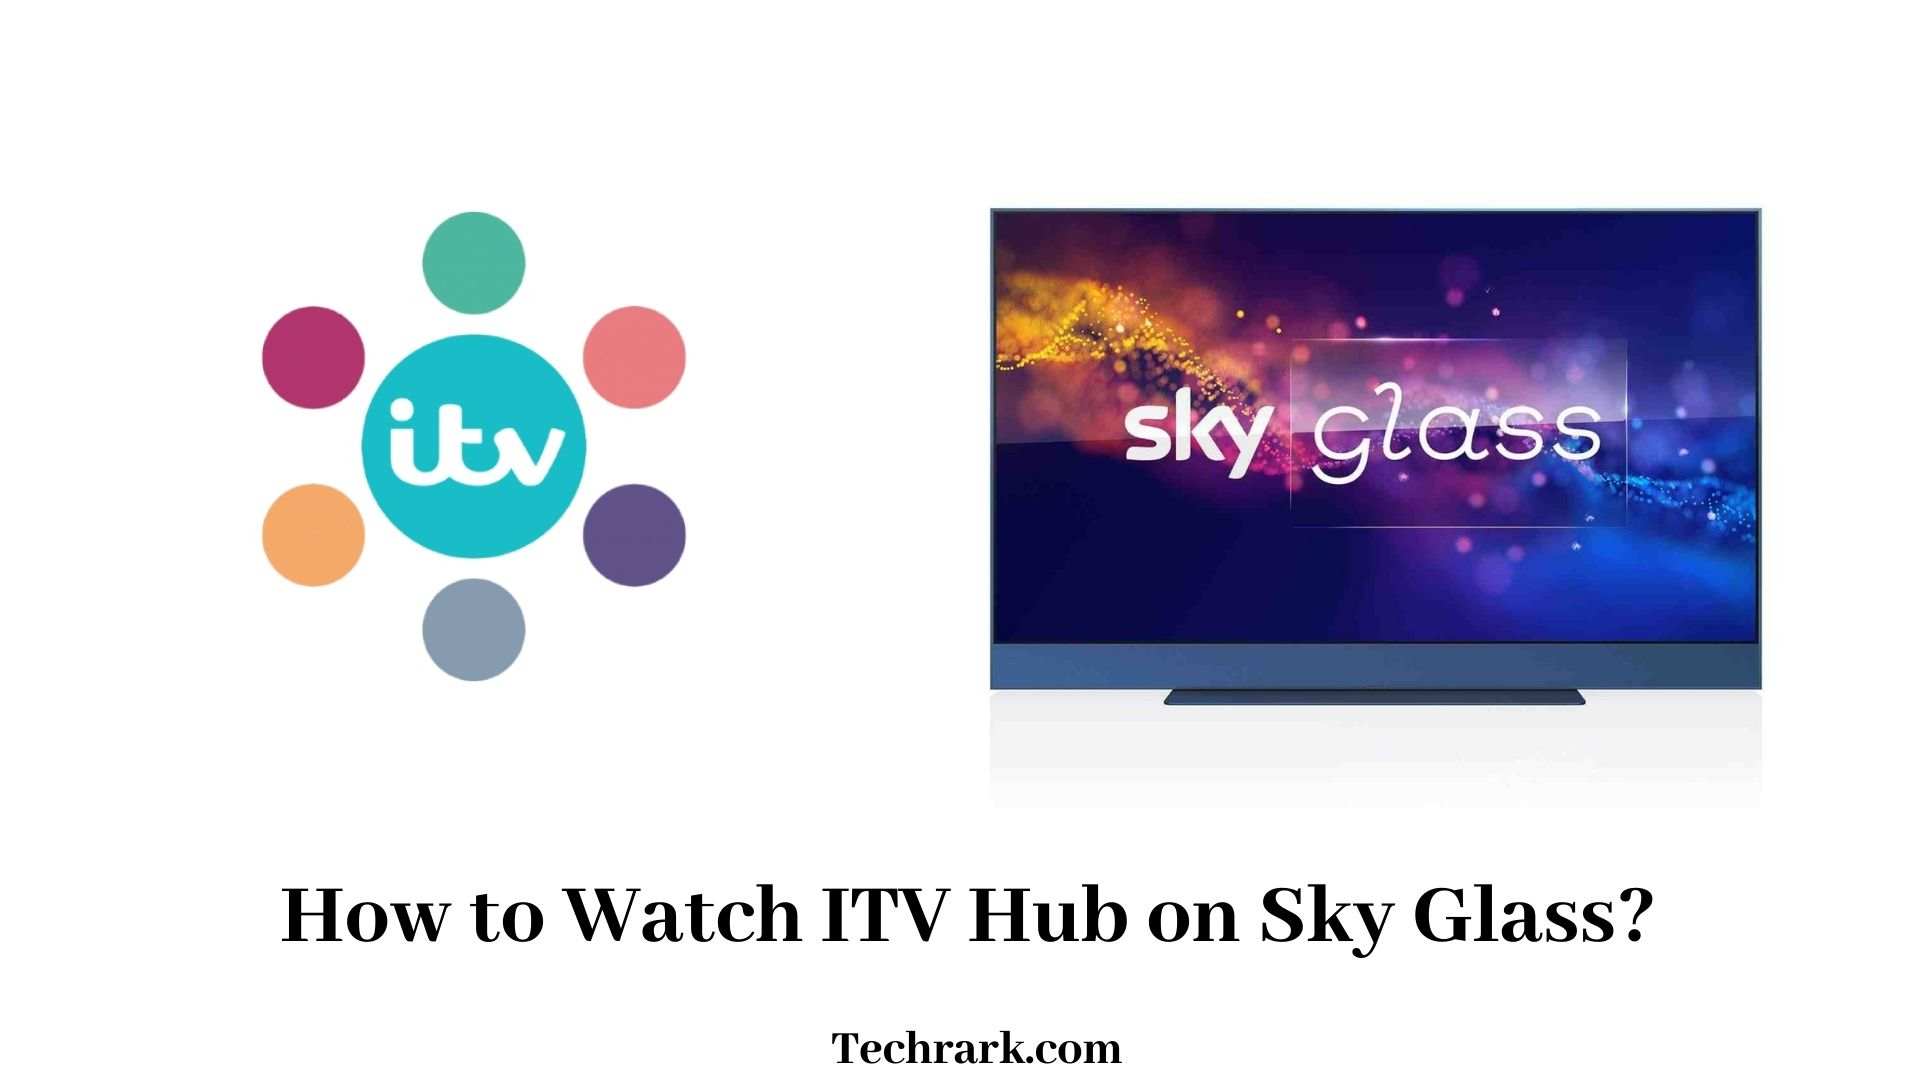 ITV Hub on Sky Glass